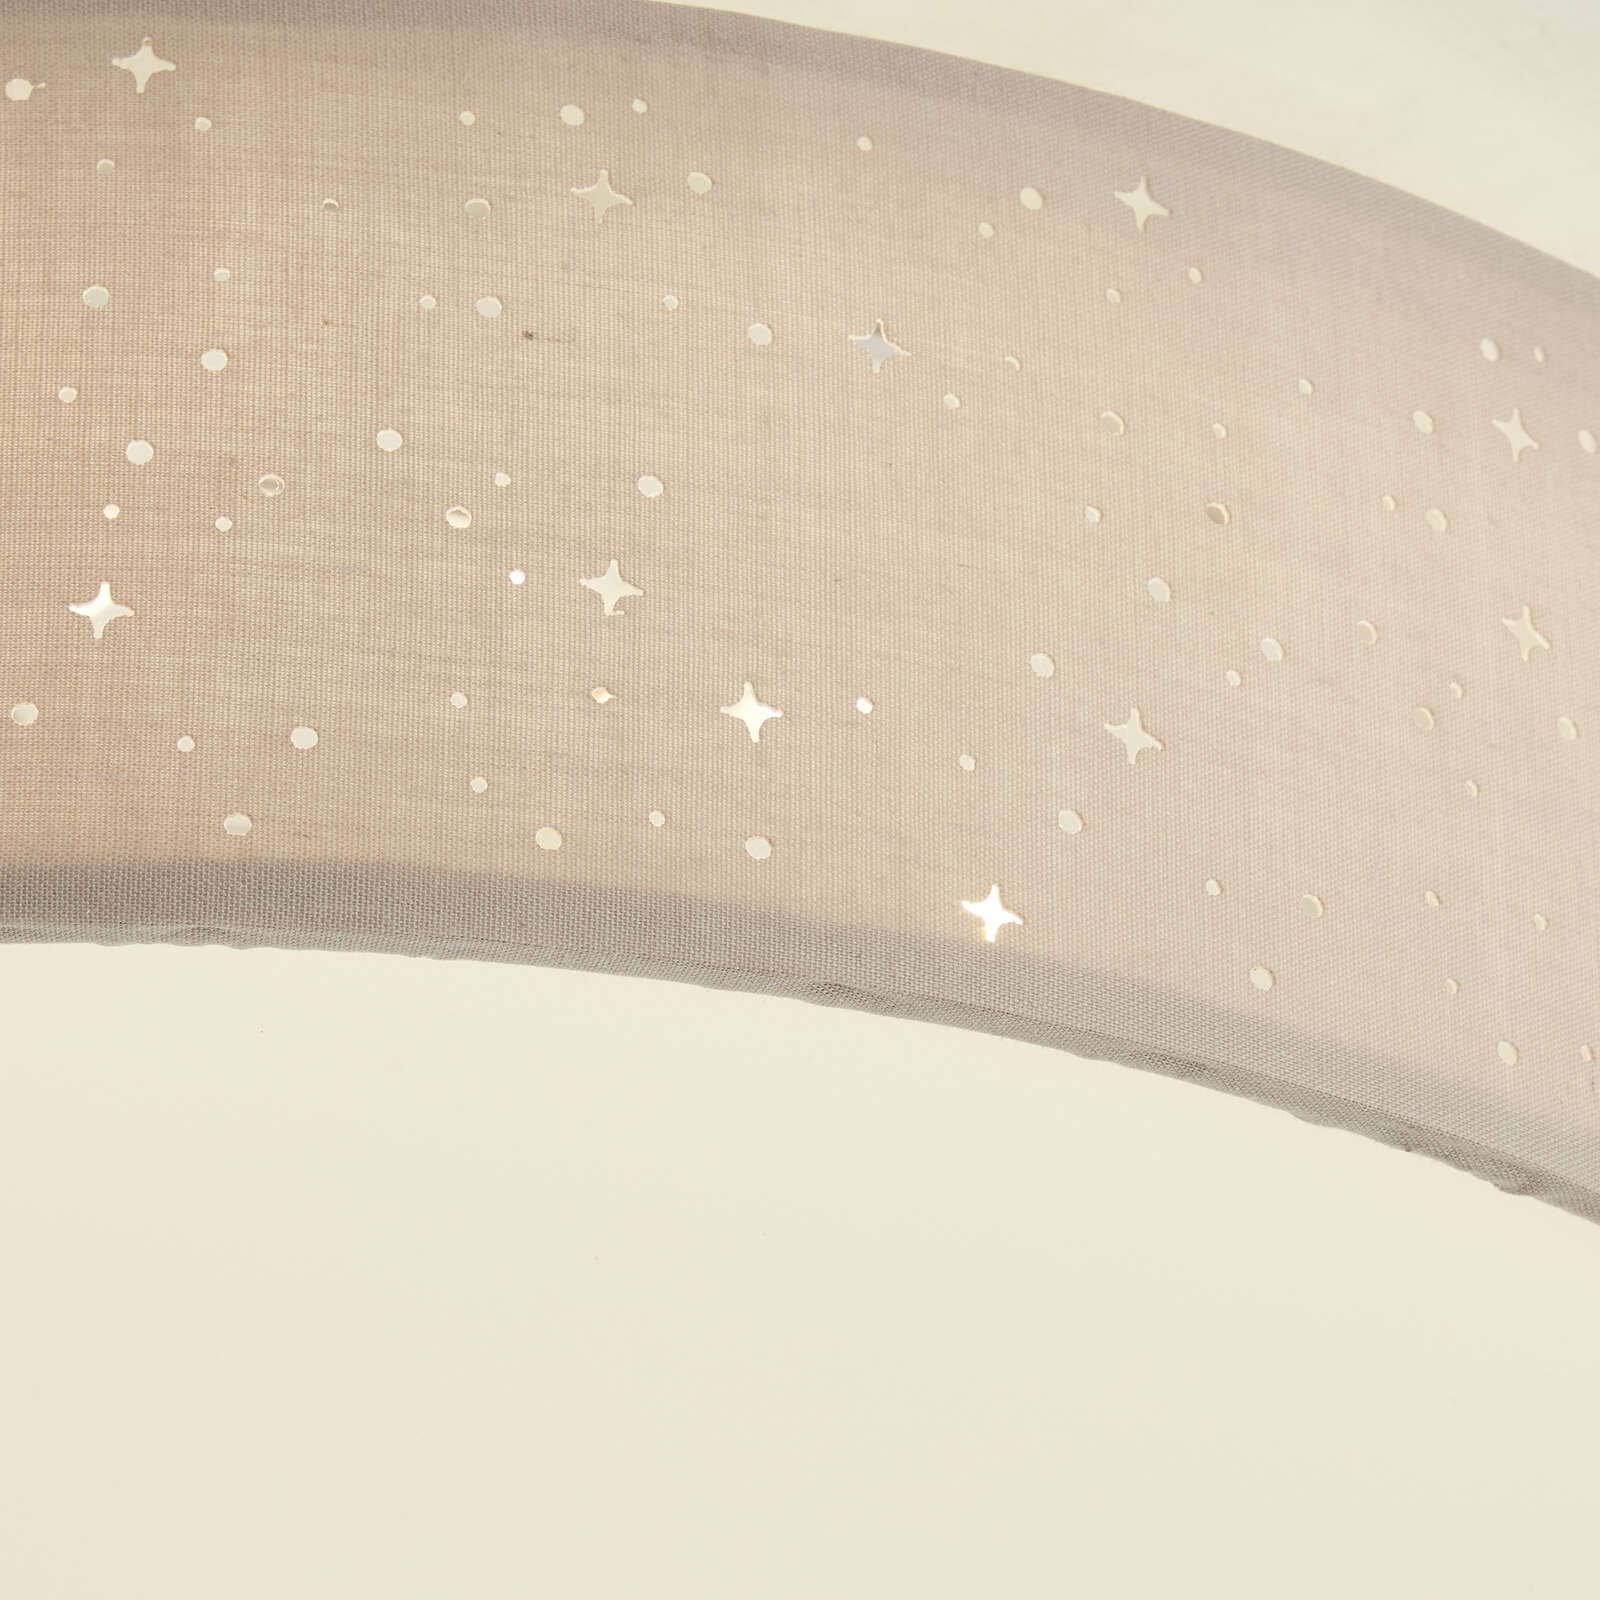             Textile ceiling light - Ava 3 - Grey
        